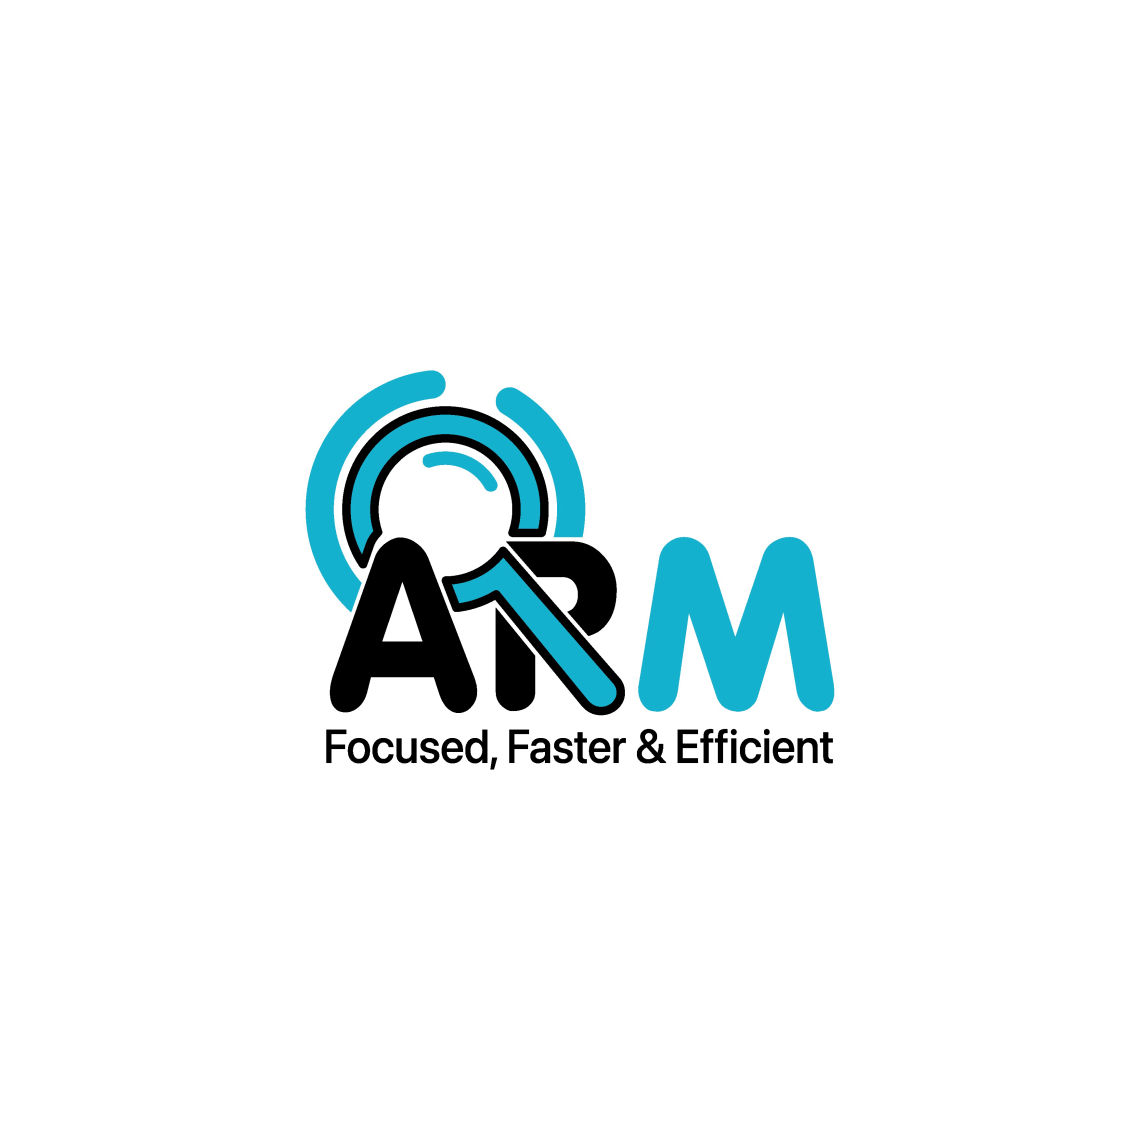 arm logo with background copy